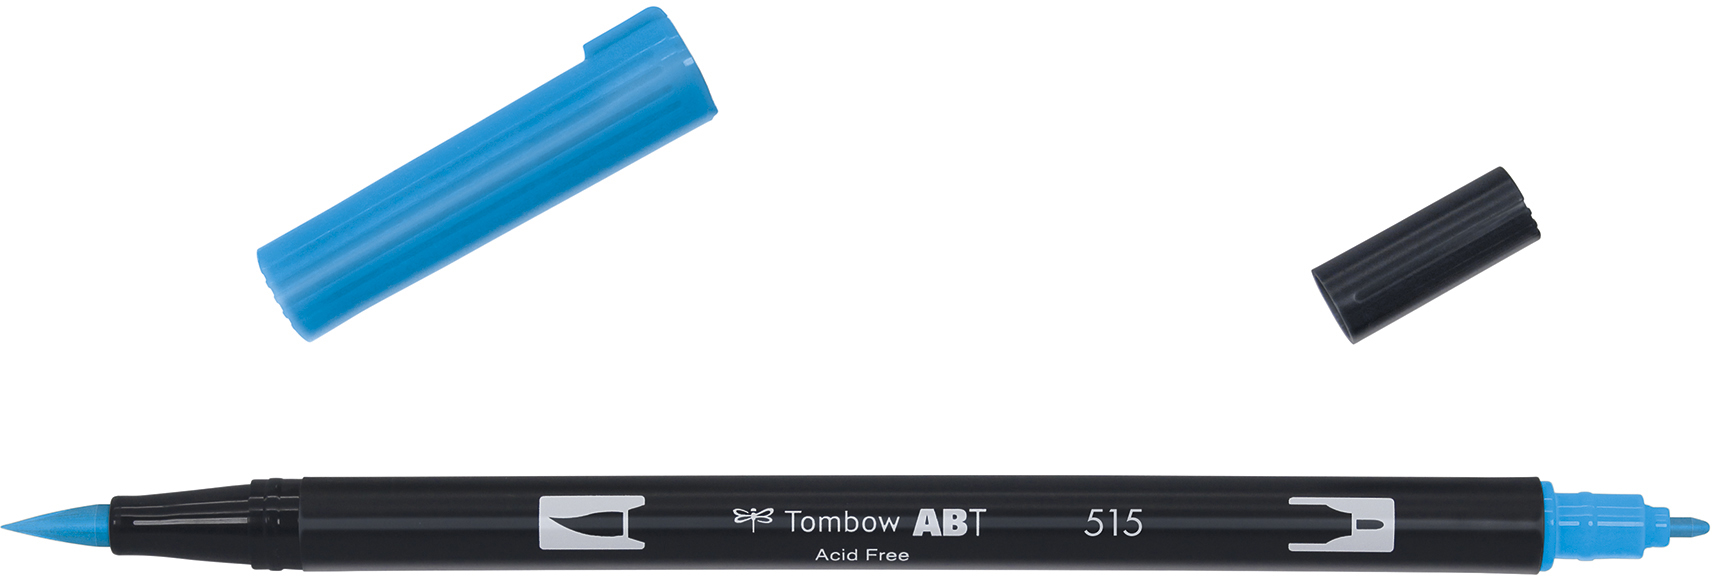 TOMBOW Dual Brush Pen ABT 515 bleu claire